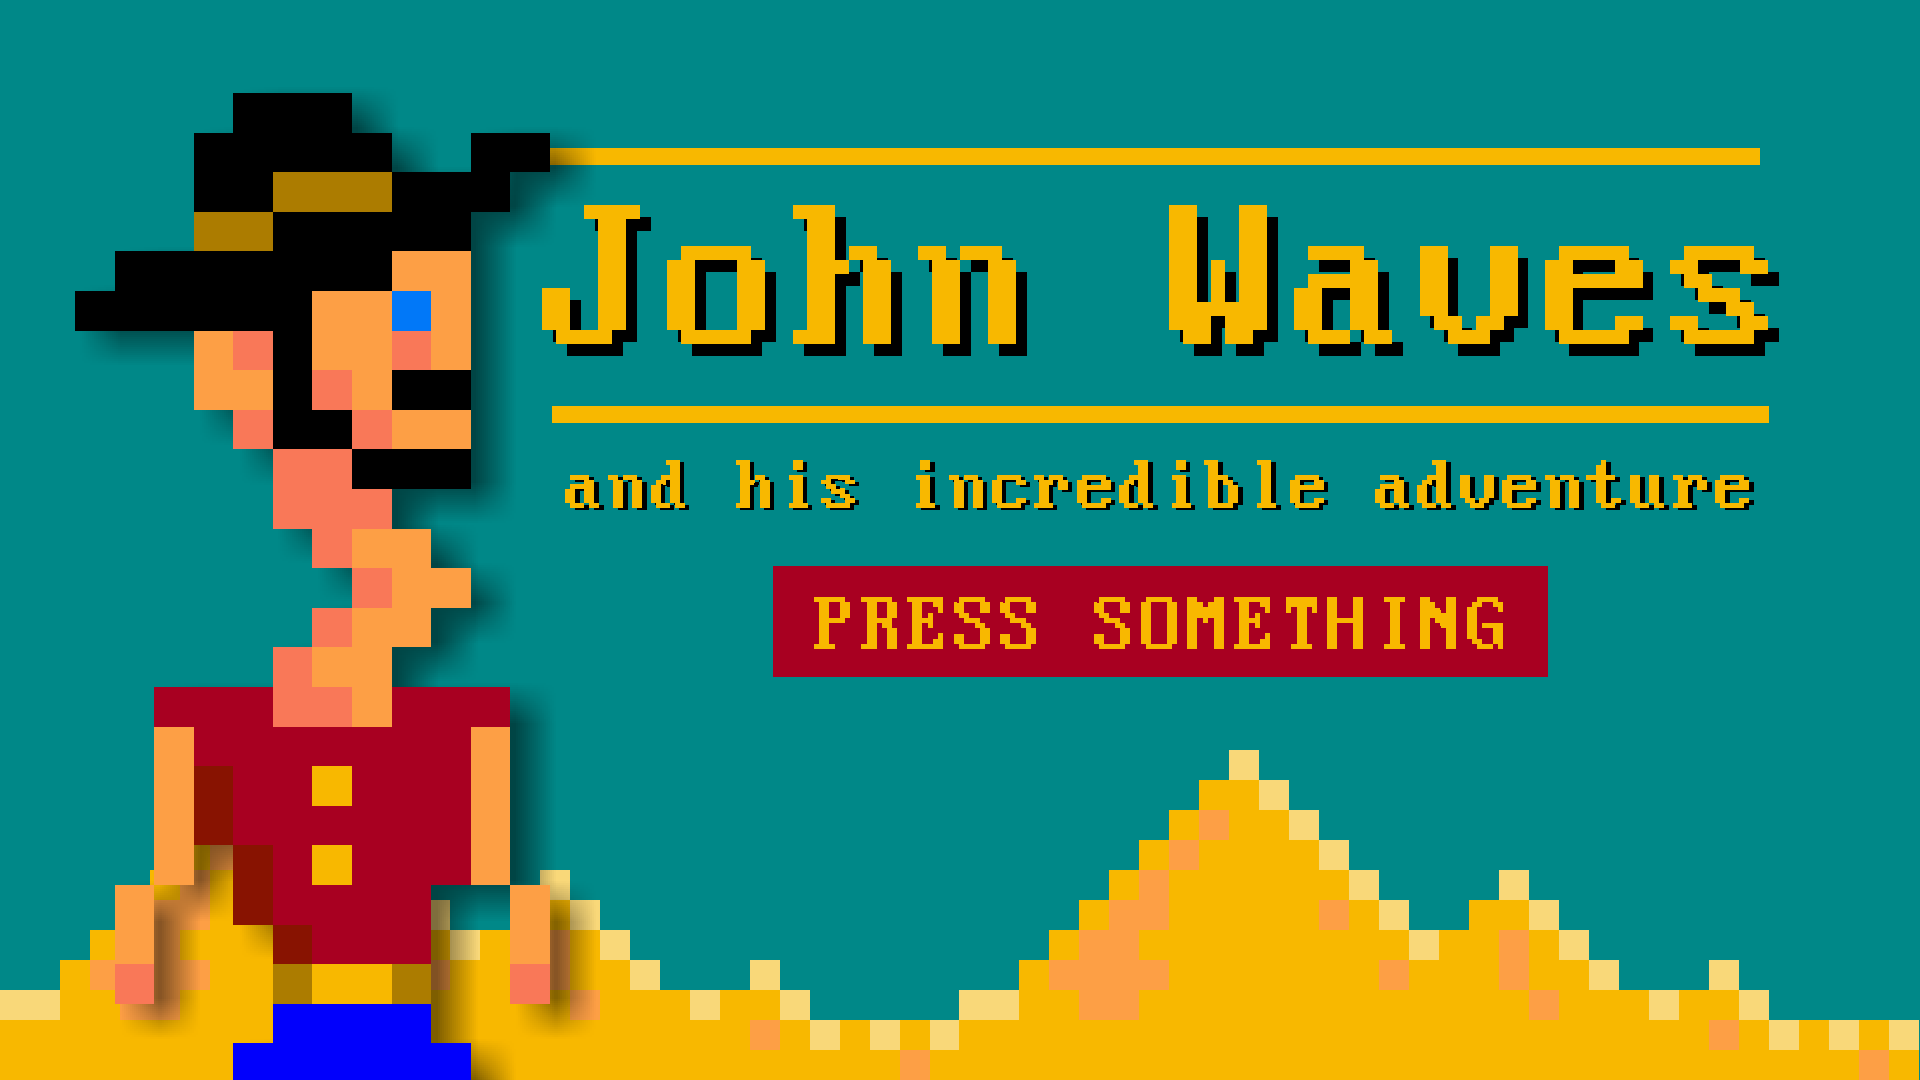 John Waves and his incredible adventure